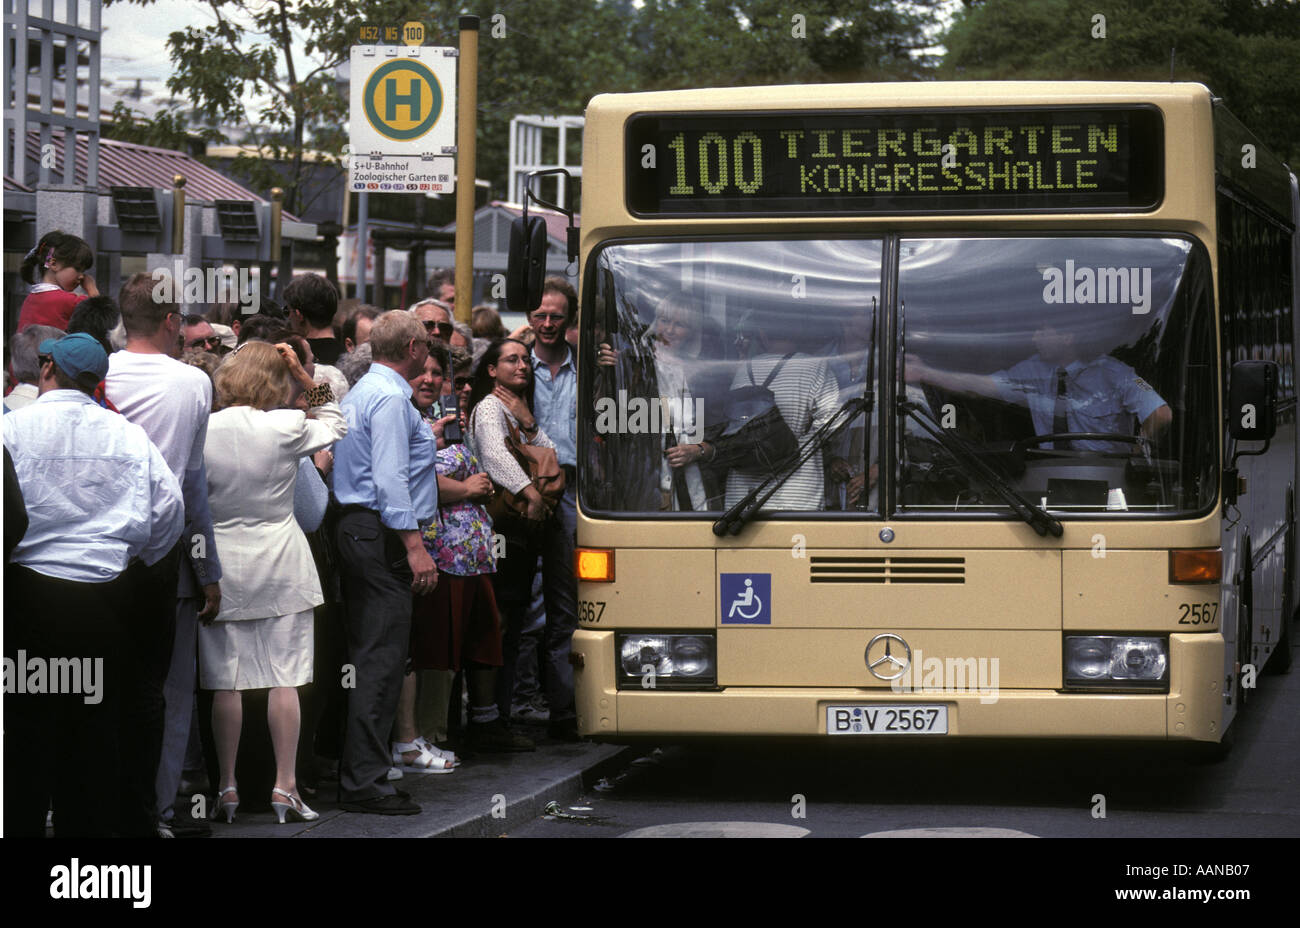 http://c8.alamy.com/comp/AANB07/germany-berlin-bus-at-a-very-crowded-bus-stop-AANB07.jpg